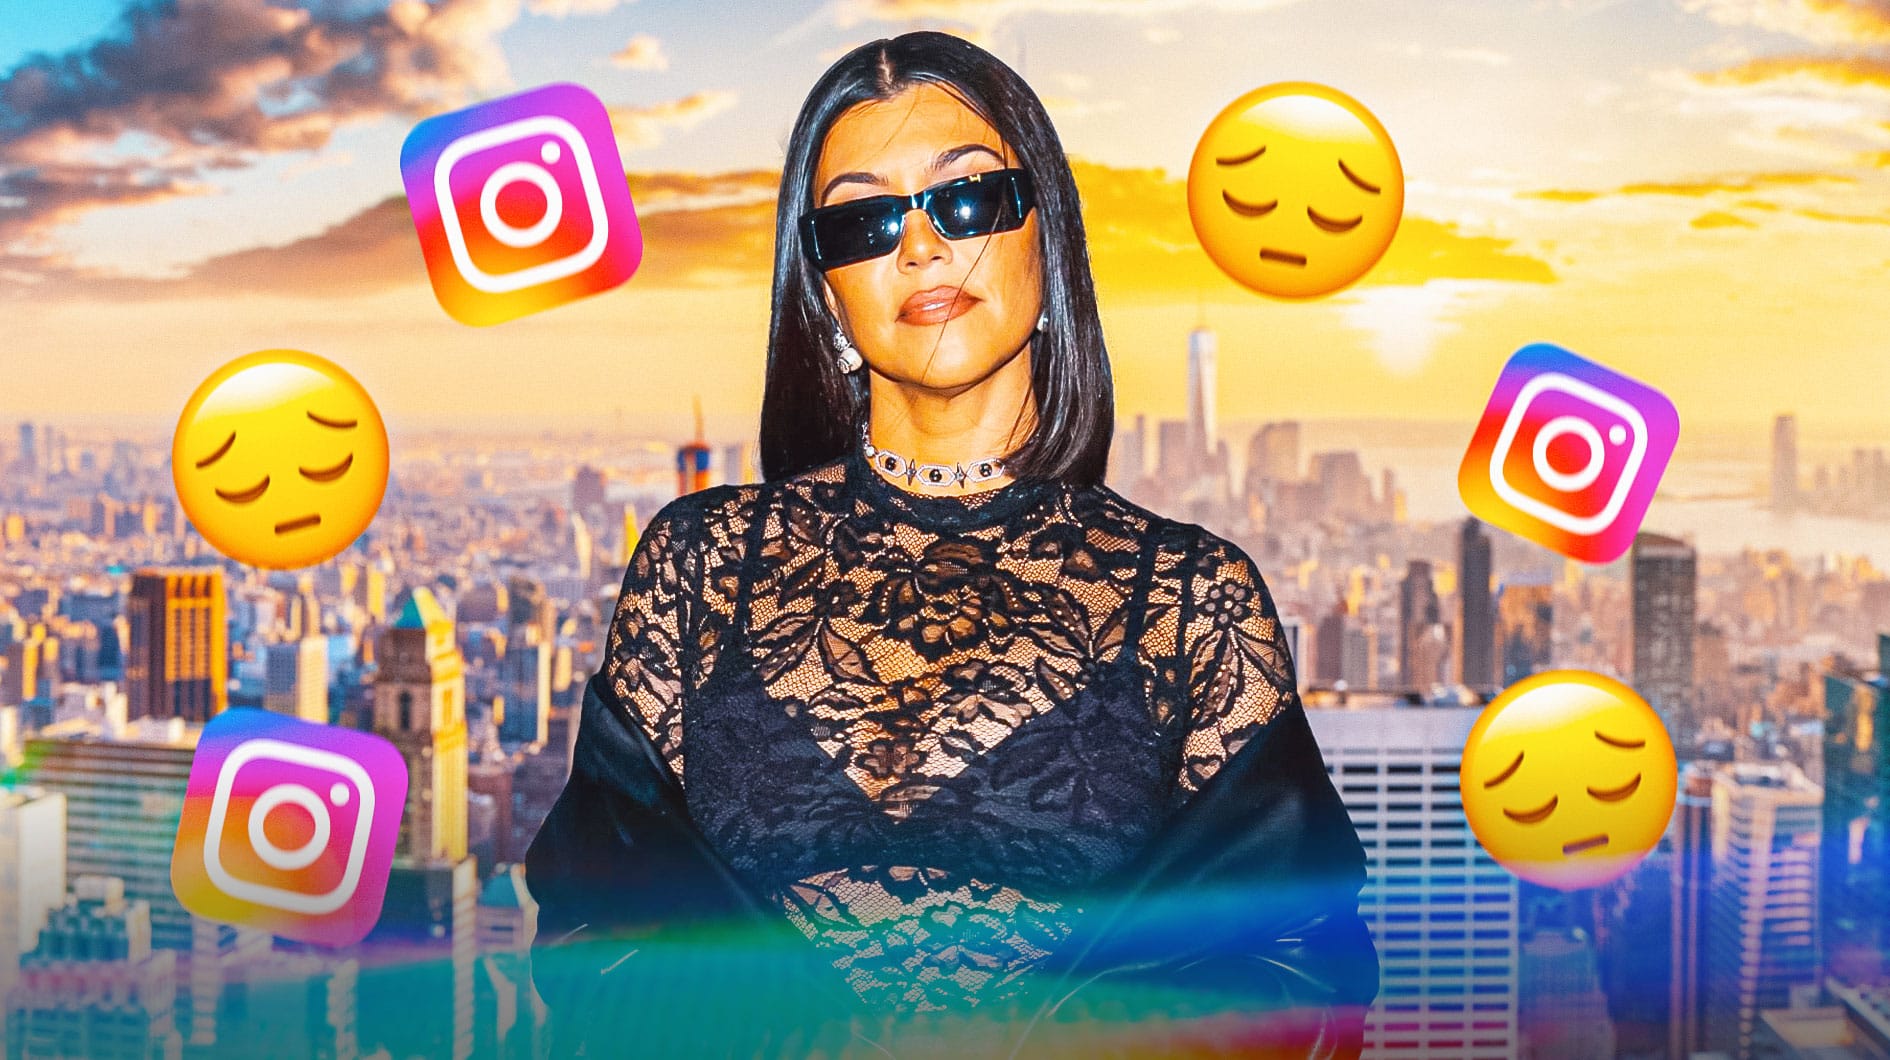 Kourtney Kardashian with Instagram logos and sad face emojis